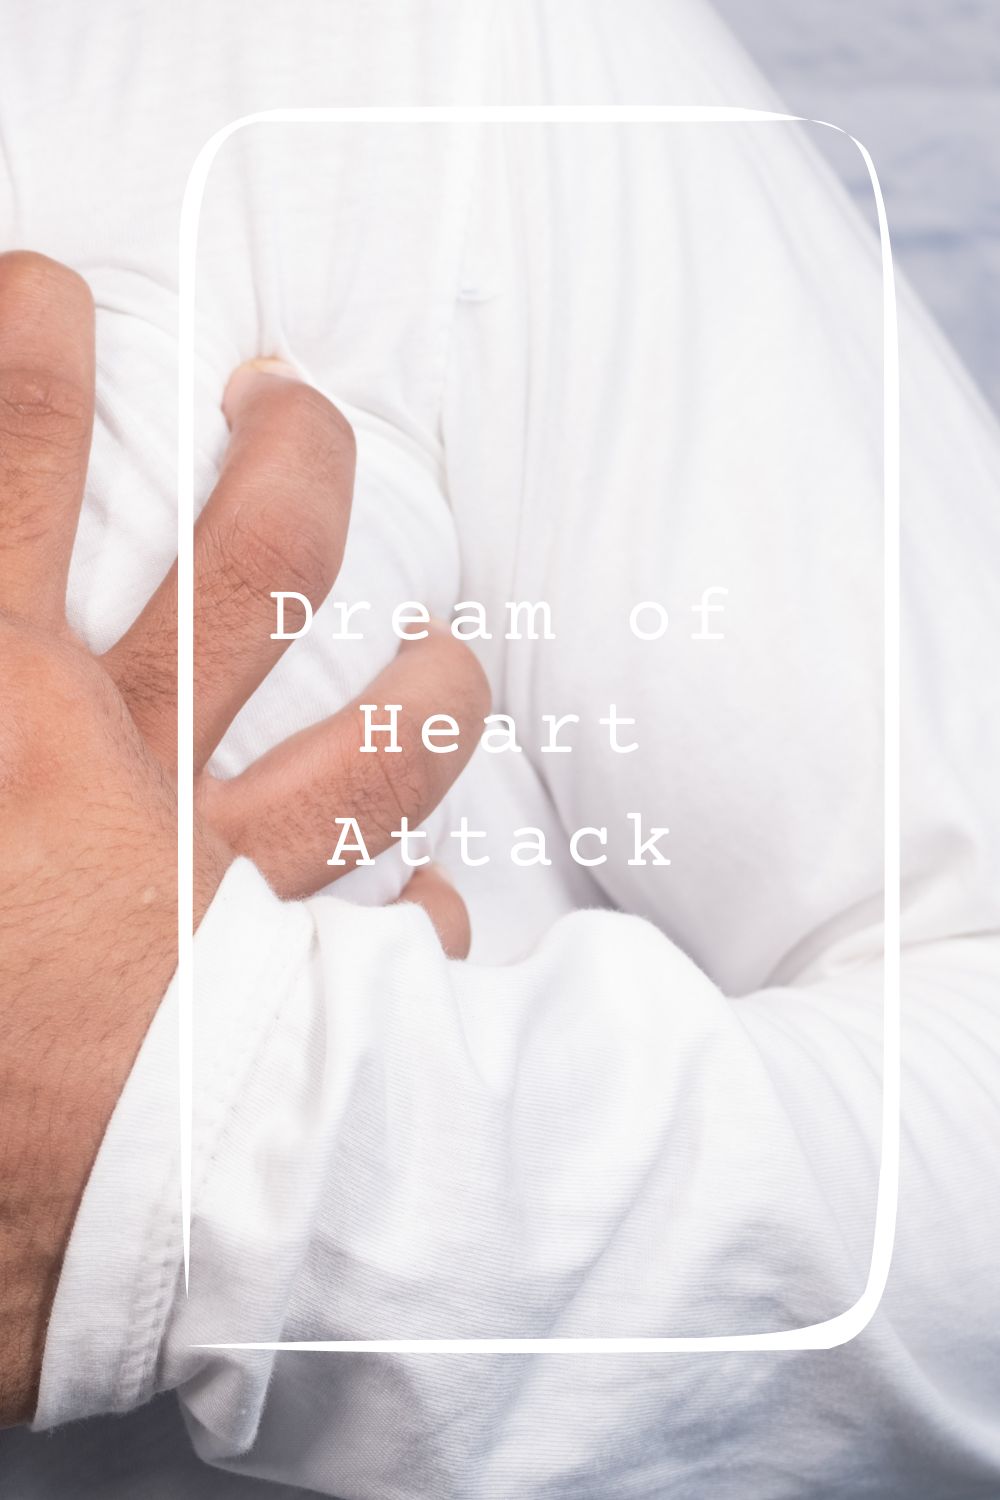 Dream of Heart Attack pin 1